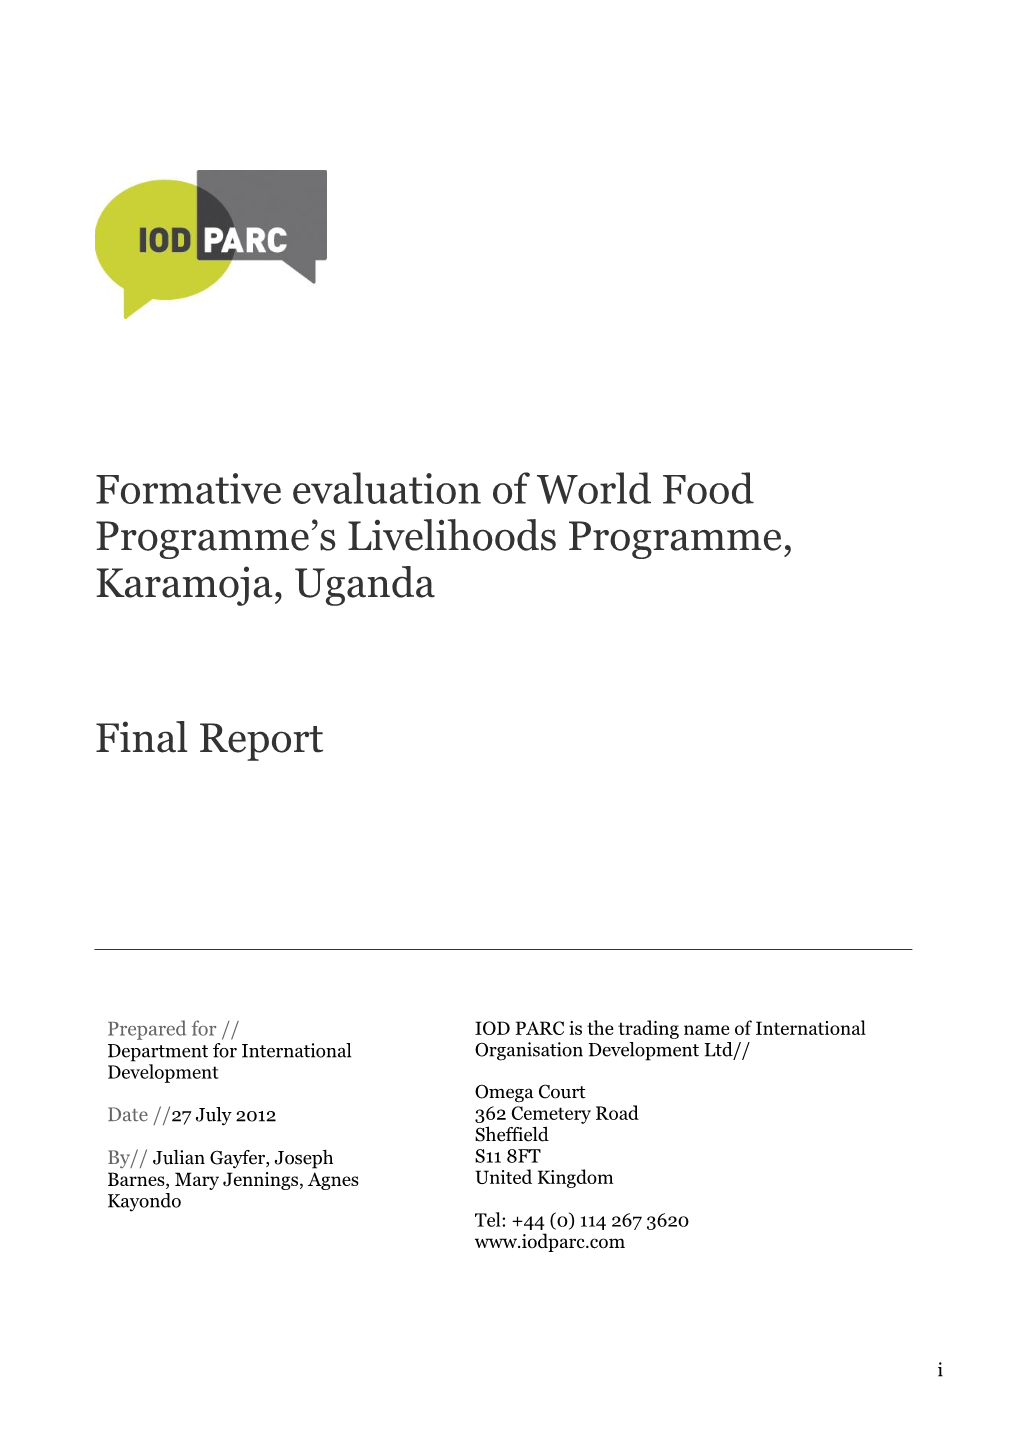 Formative Evaluation of World Food Programme's Livelihoods